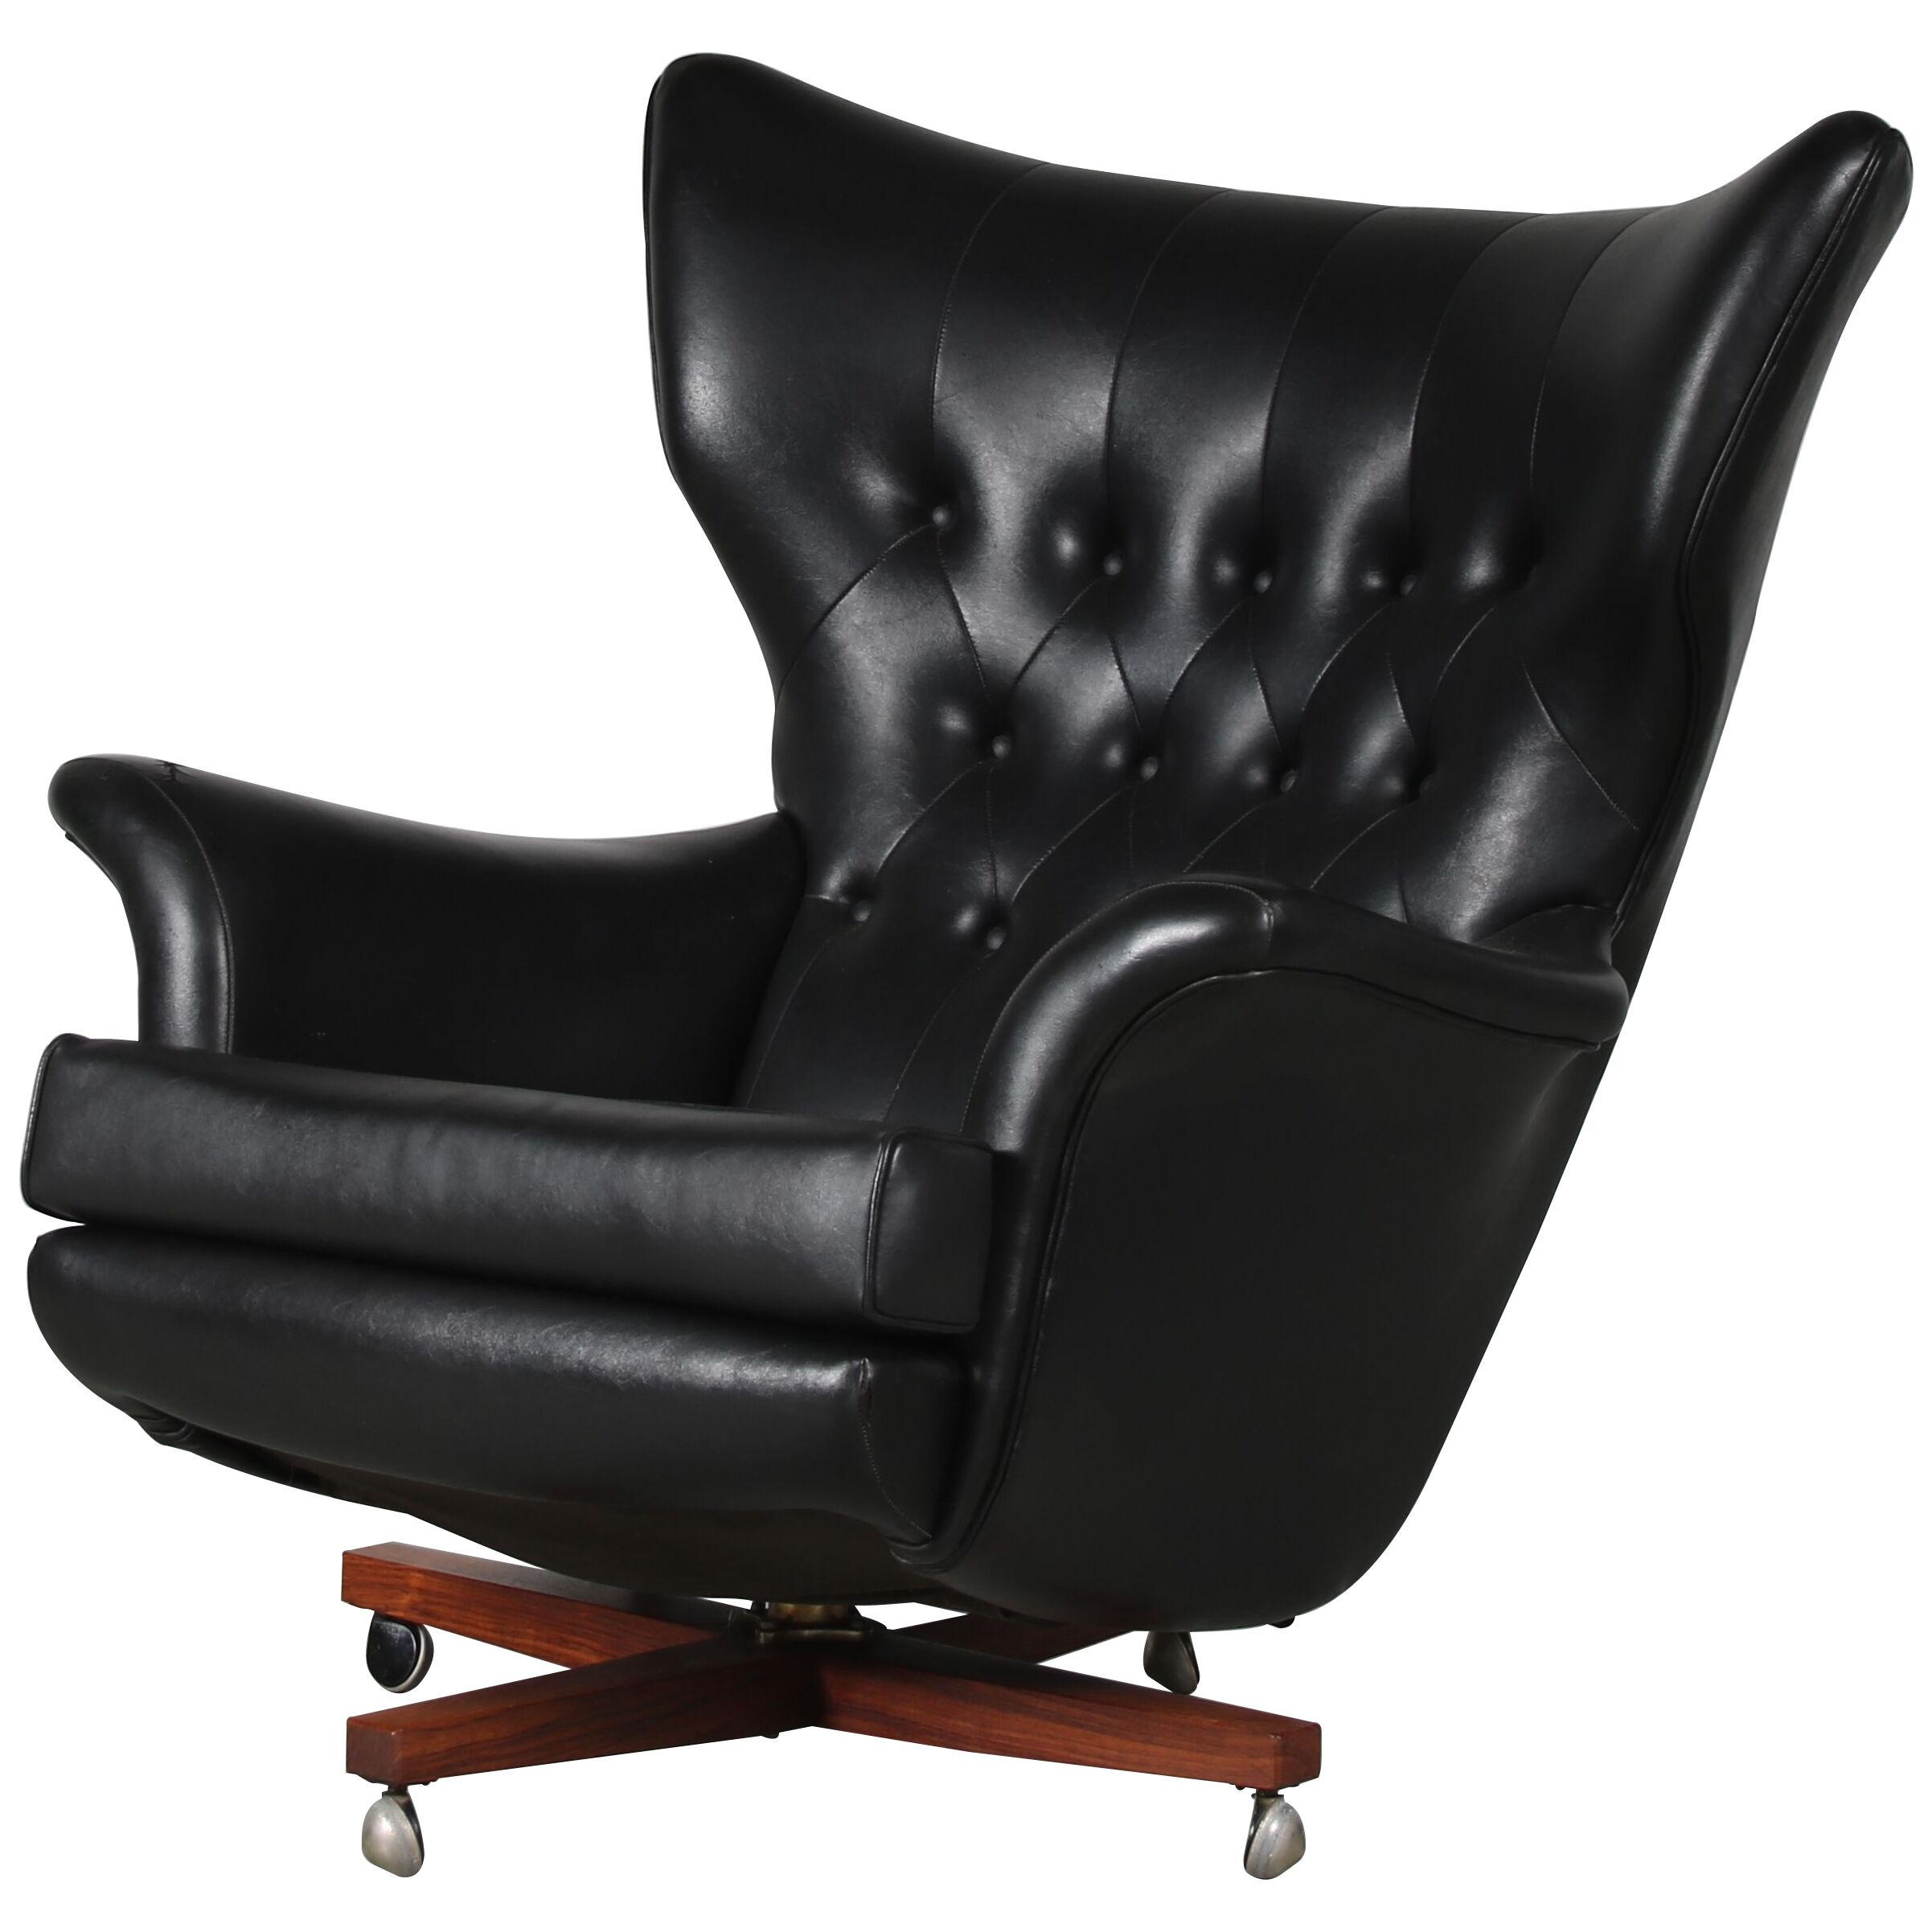 Model 6250 “Villain Chair” by G-Plan, UK 1960